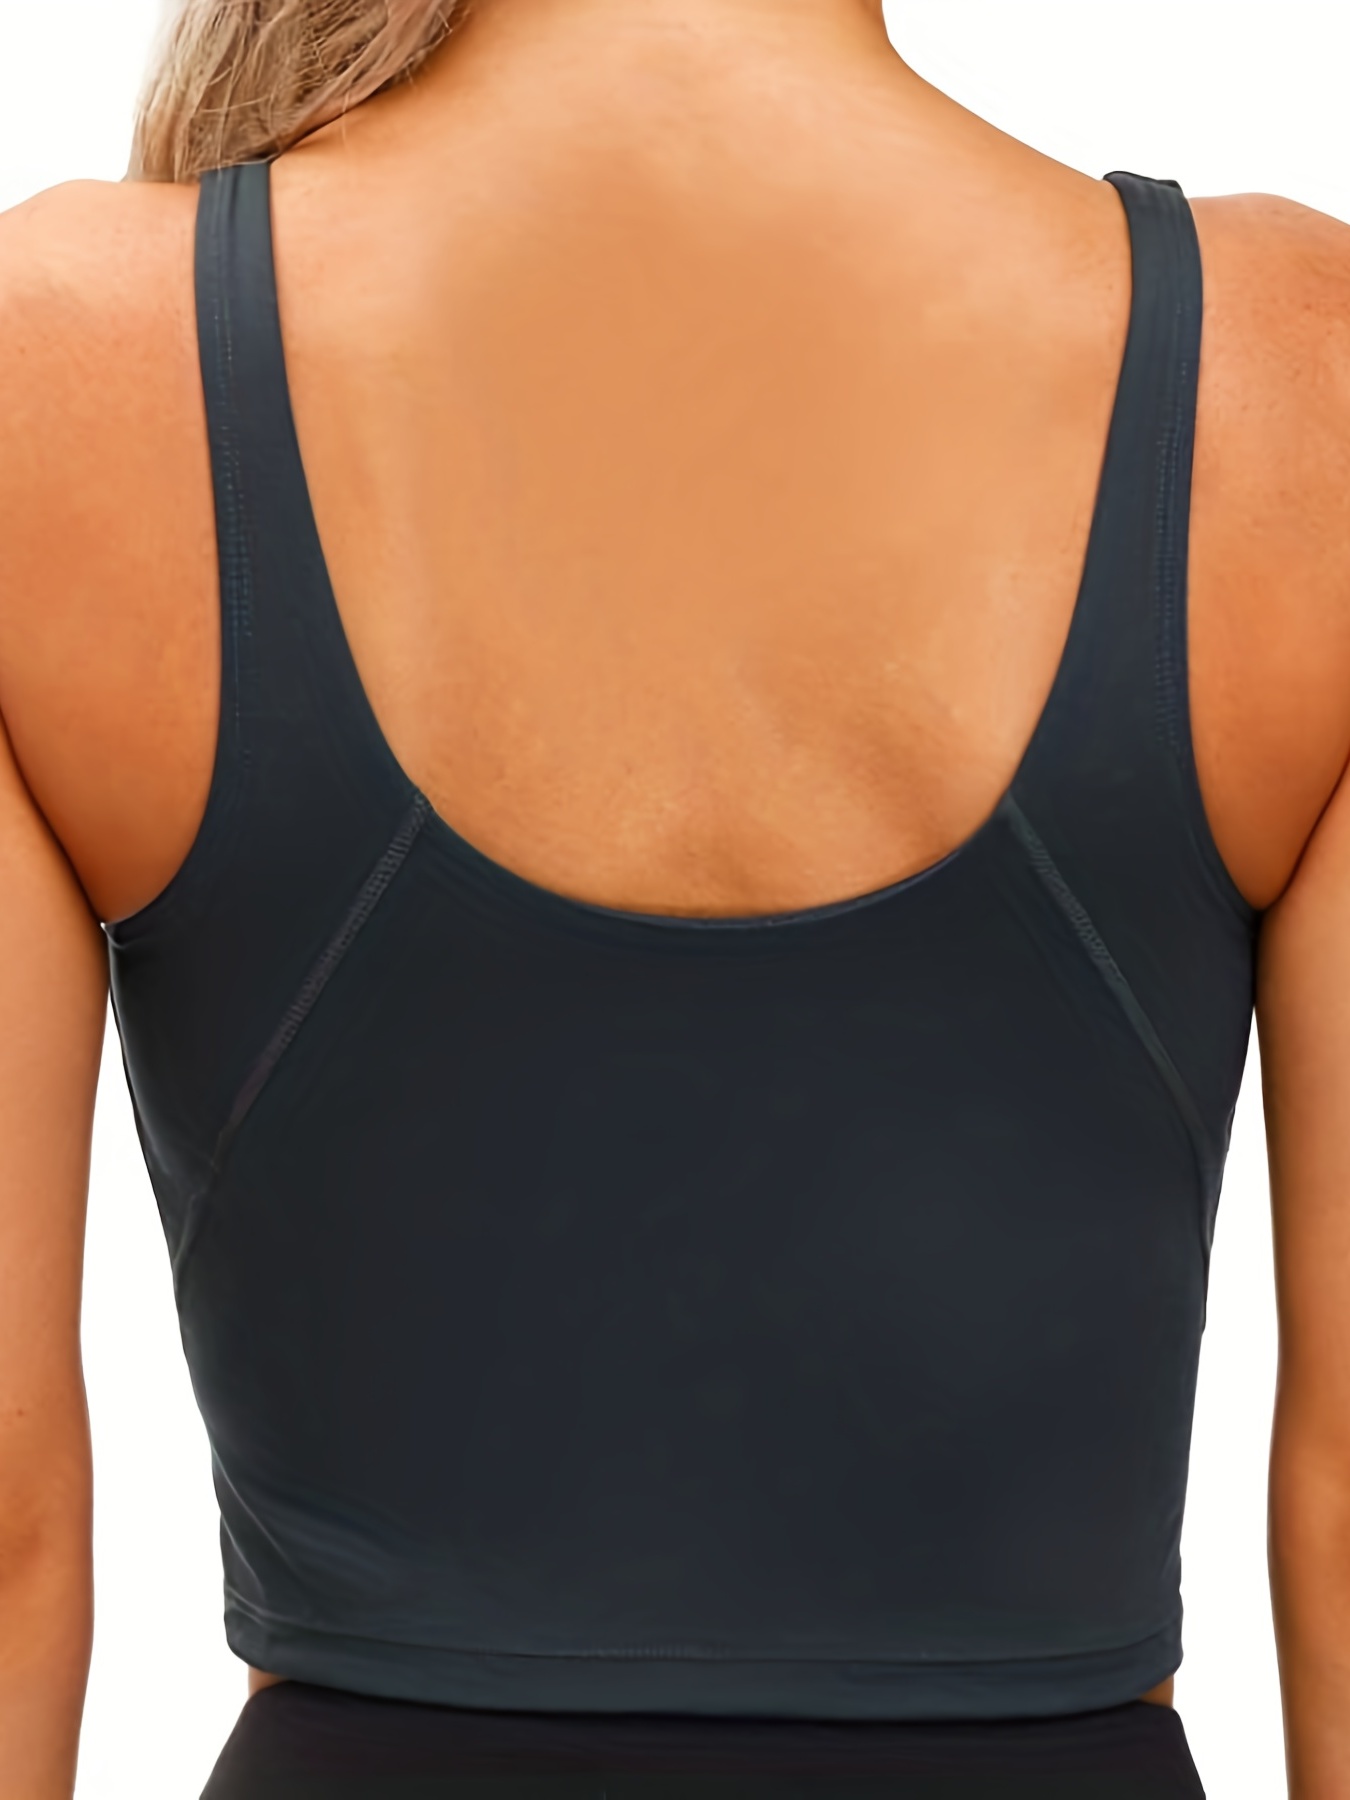 Women's Padded Sports Bra Tank Top with Cross Knot – Small-Black – DaysU